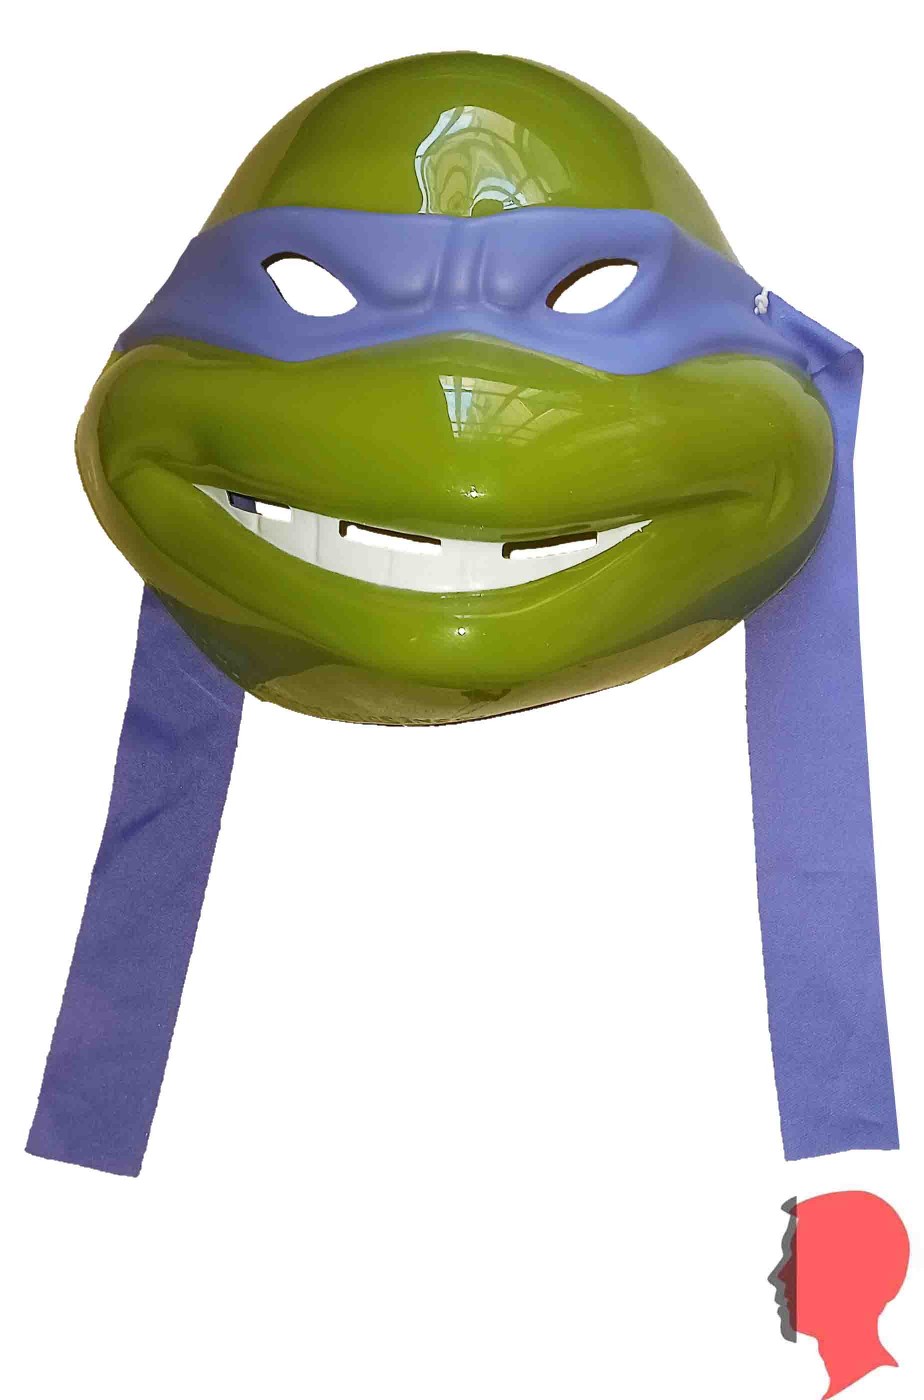 https://carnivalhalloween.com/24042-large_default/maschera-donatello-ninja-turtles-in-plastica-.jpg